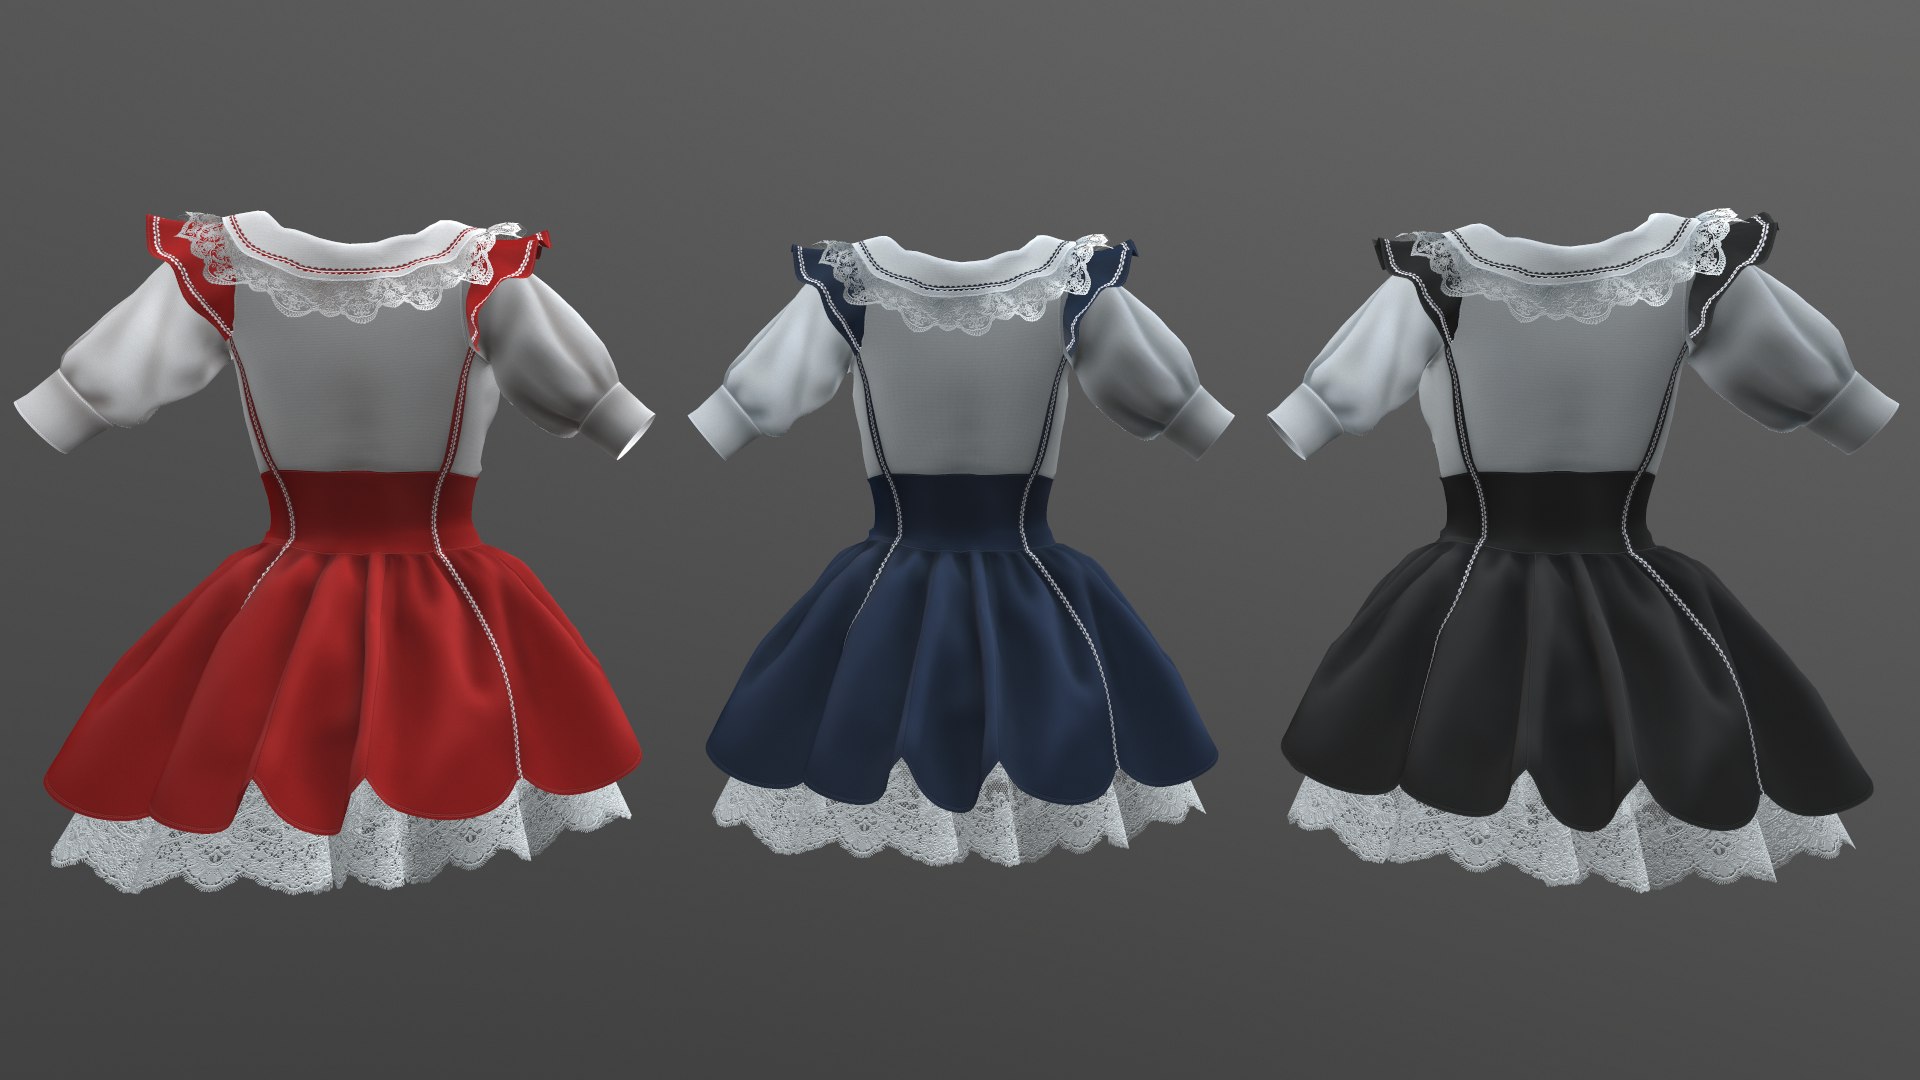 Gothic-loli dress - 3 colors 3D model - TurboSquid 1744894